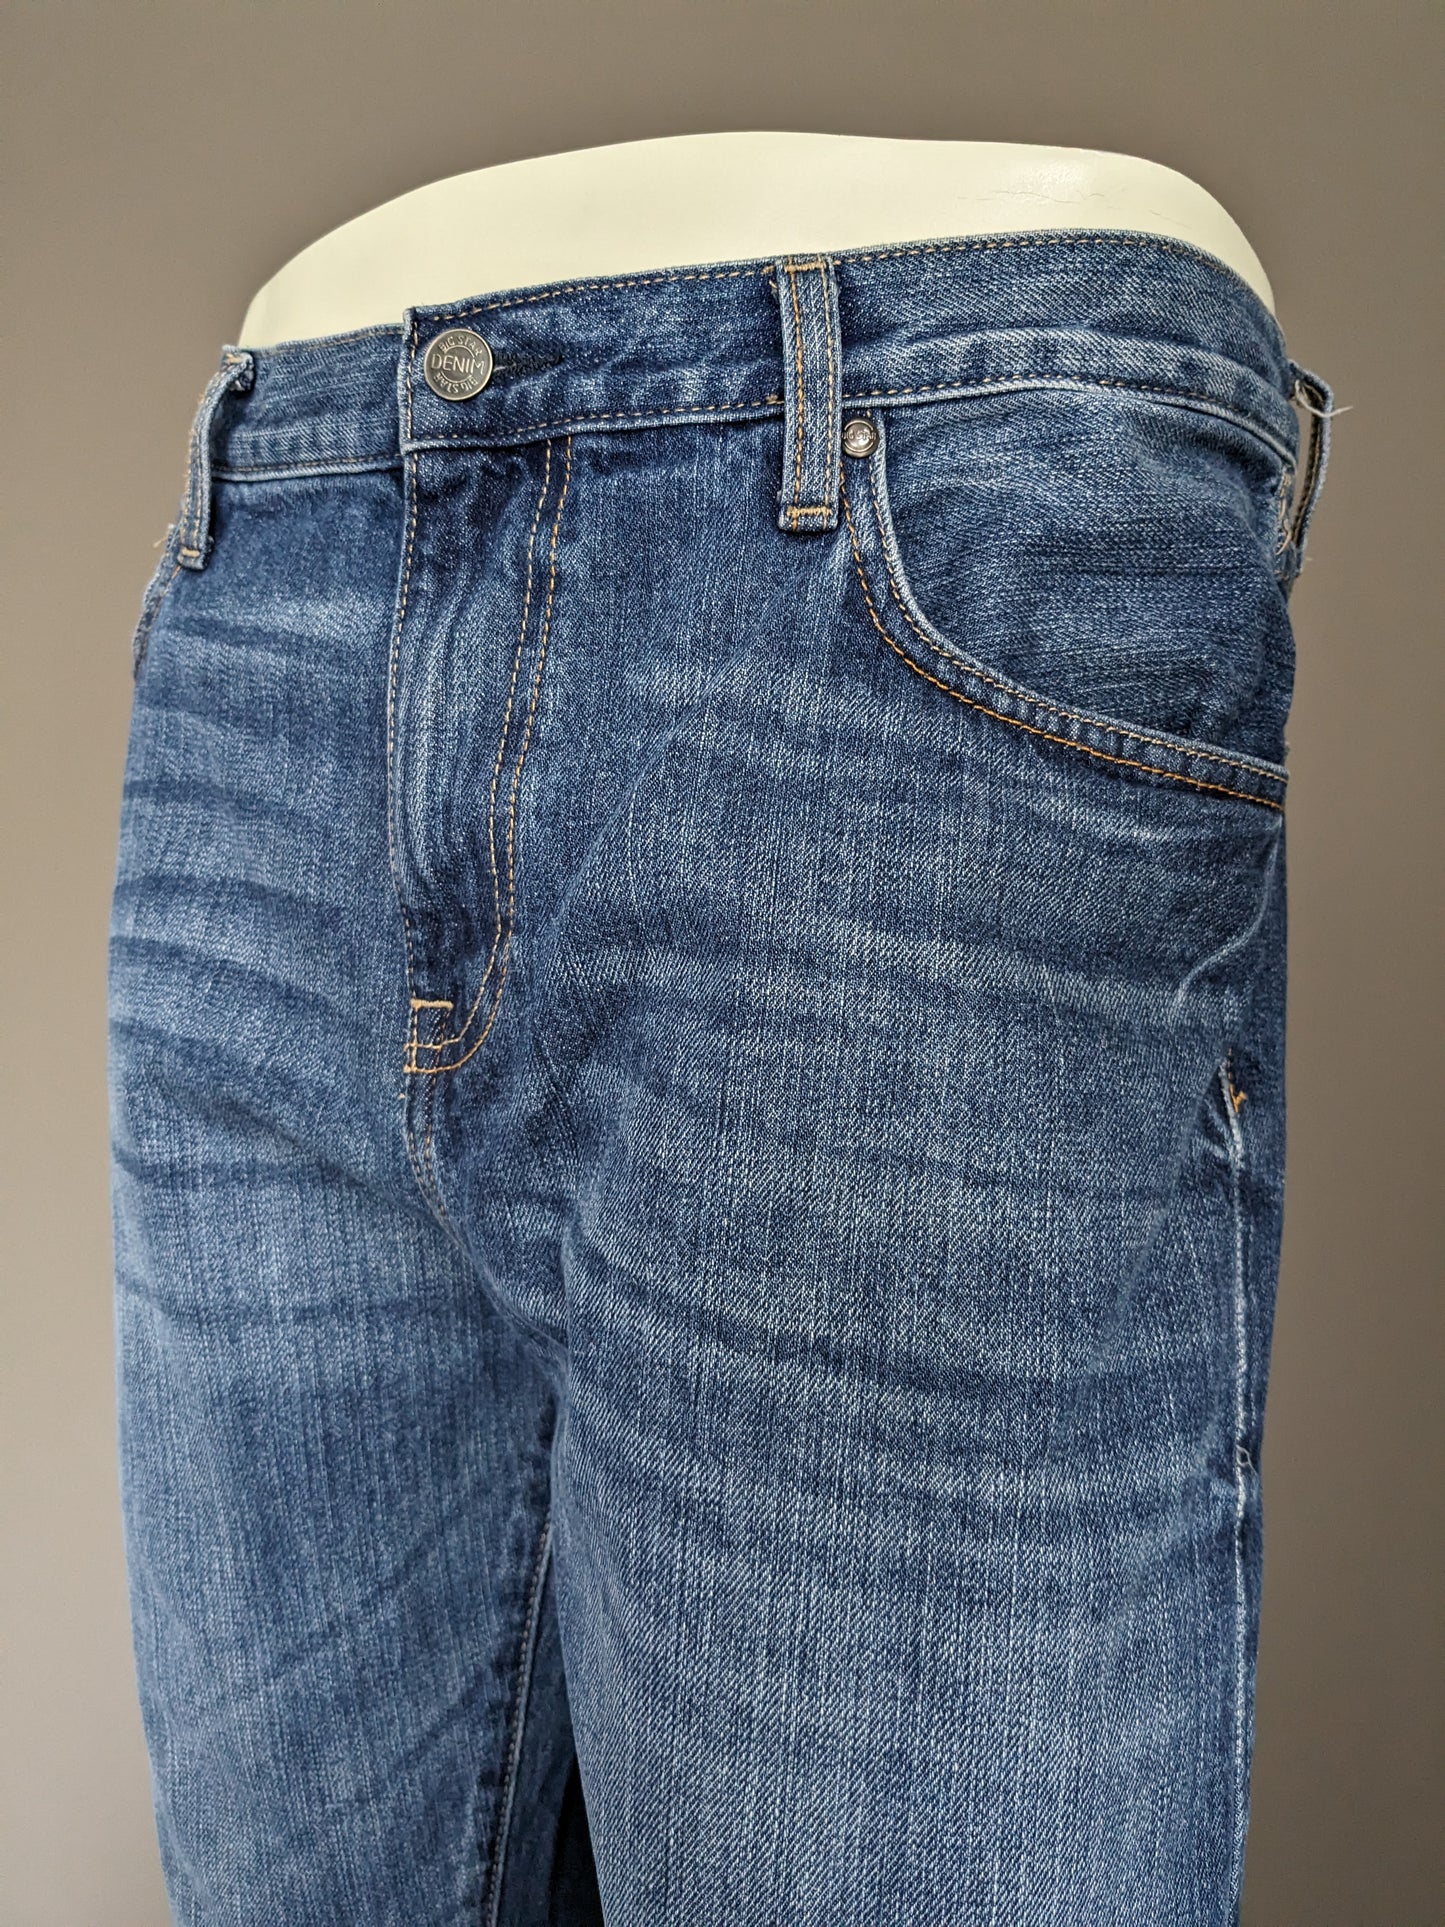 Big Star Jeans. Blue colored. Type Rogar. Regular fit. Size W36 - L32.